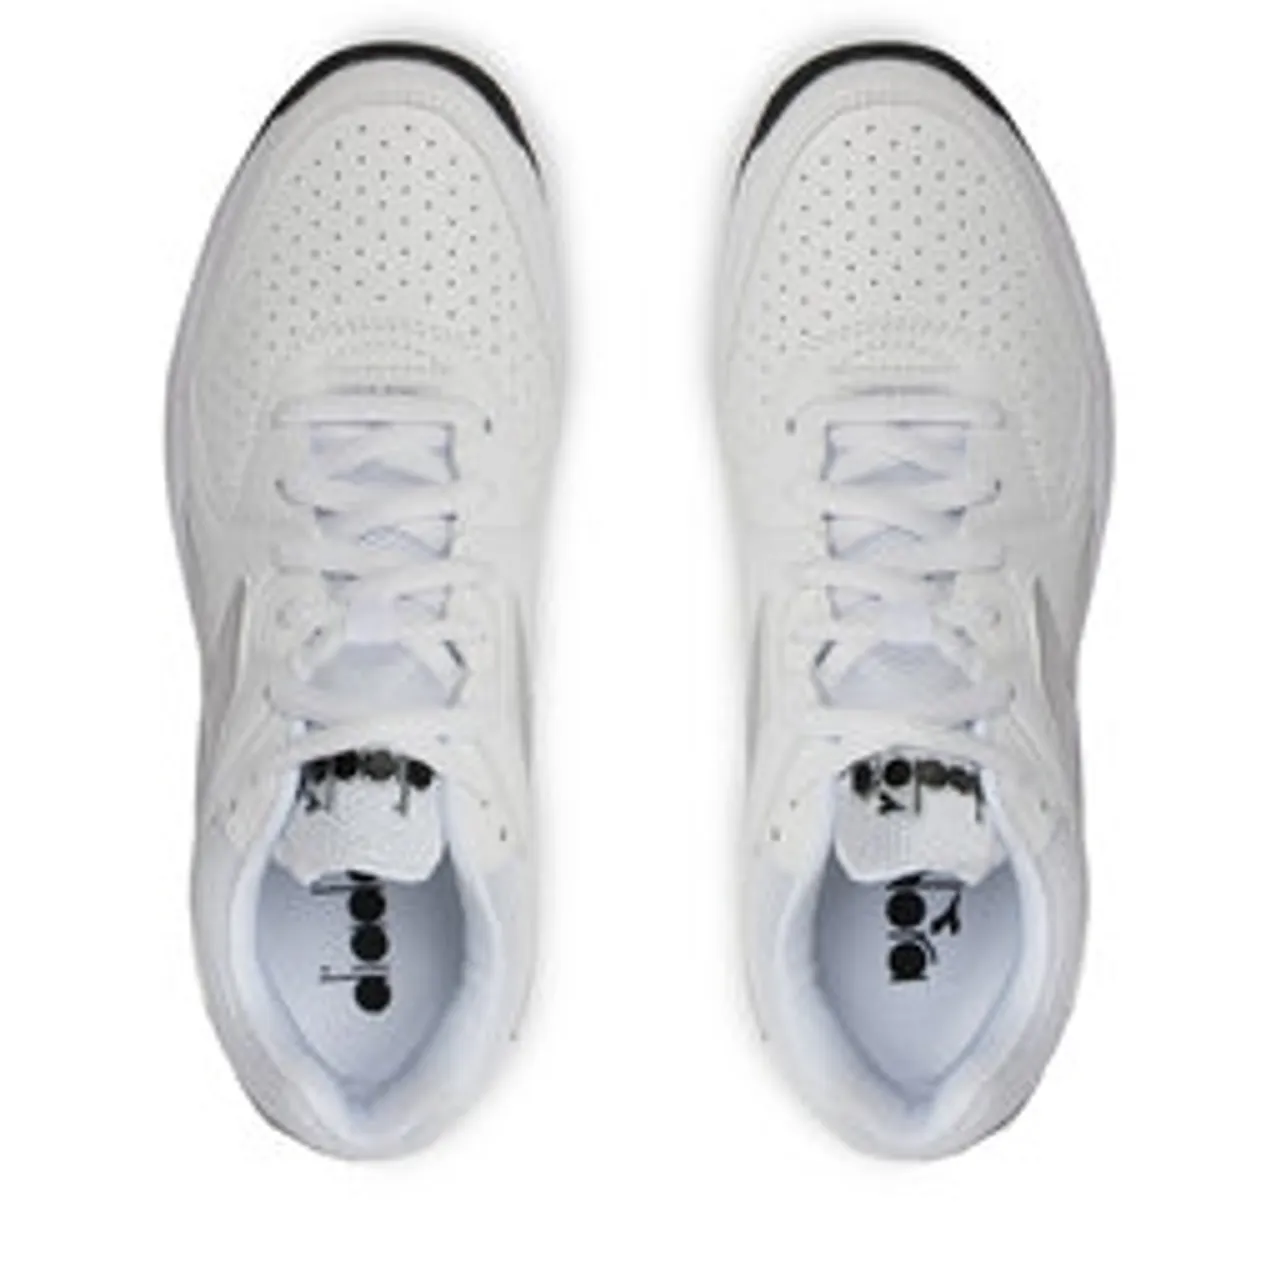 Schuhe Diadora Smash 6 W 101.179101 01 C3518 White/Silver Dd/Black